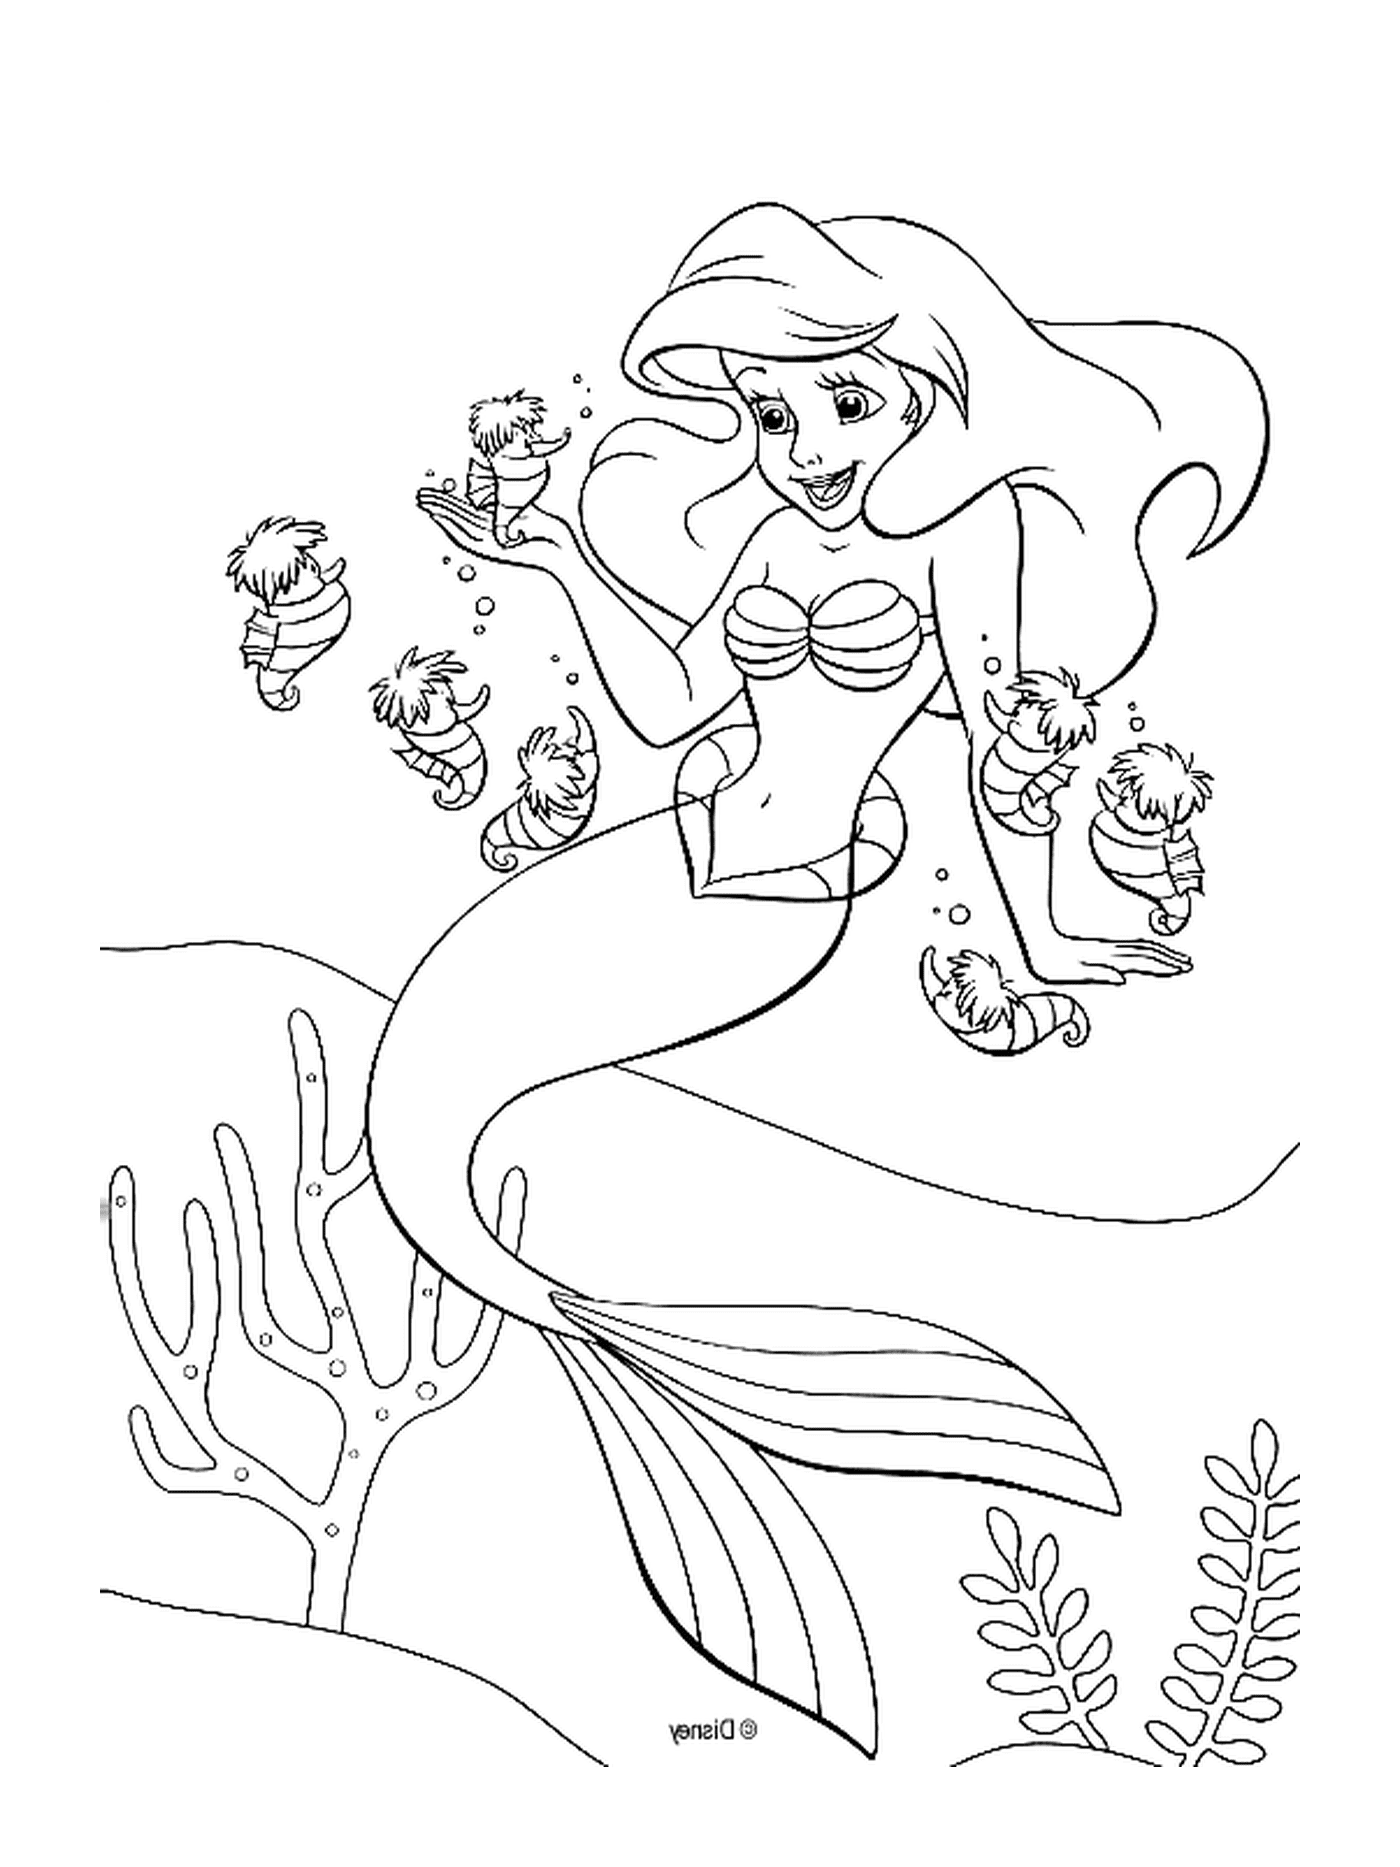  Meerjungfrau von Meereslebewesen umgeben 